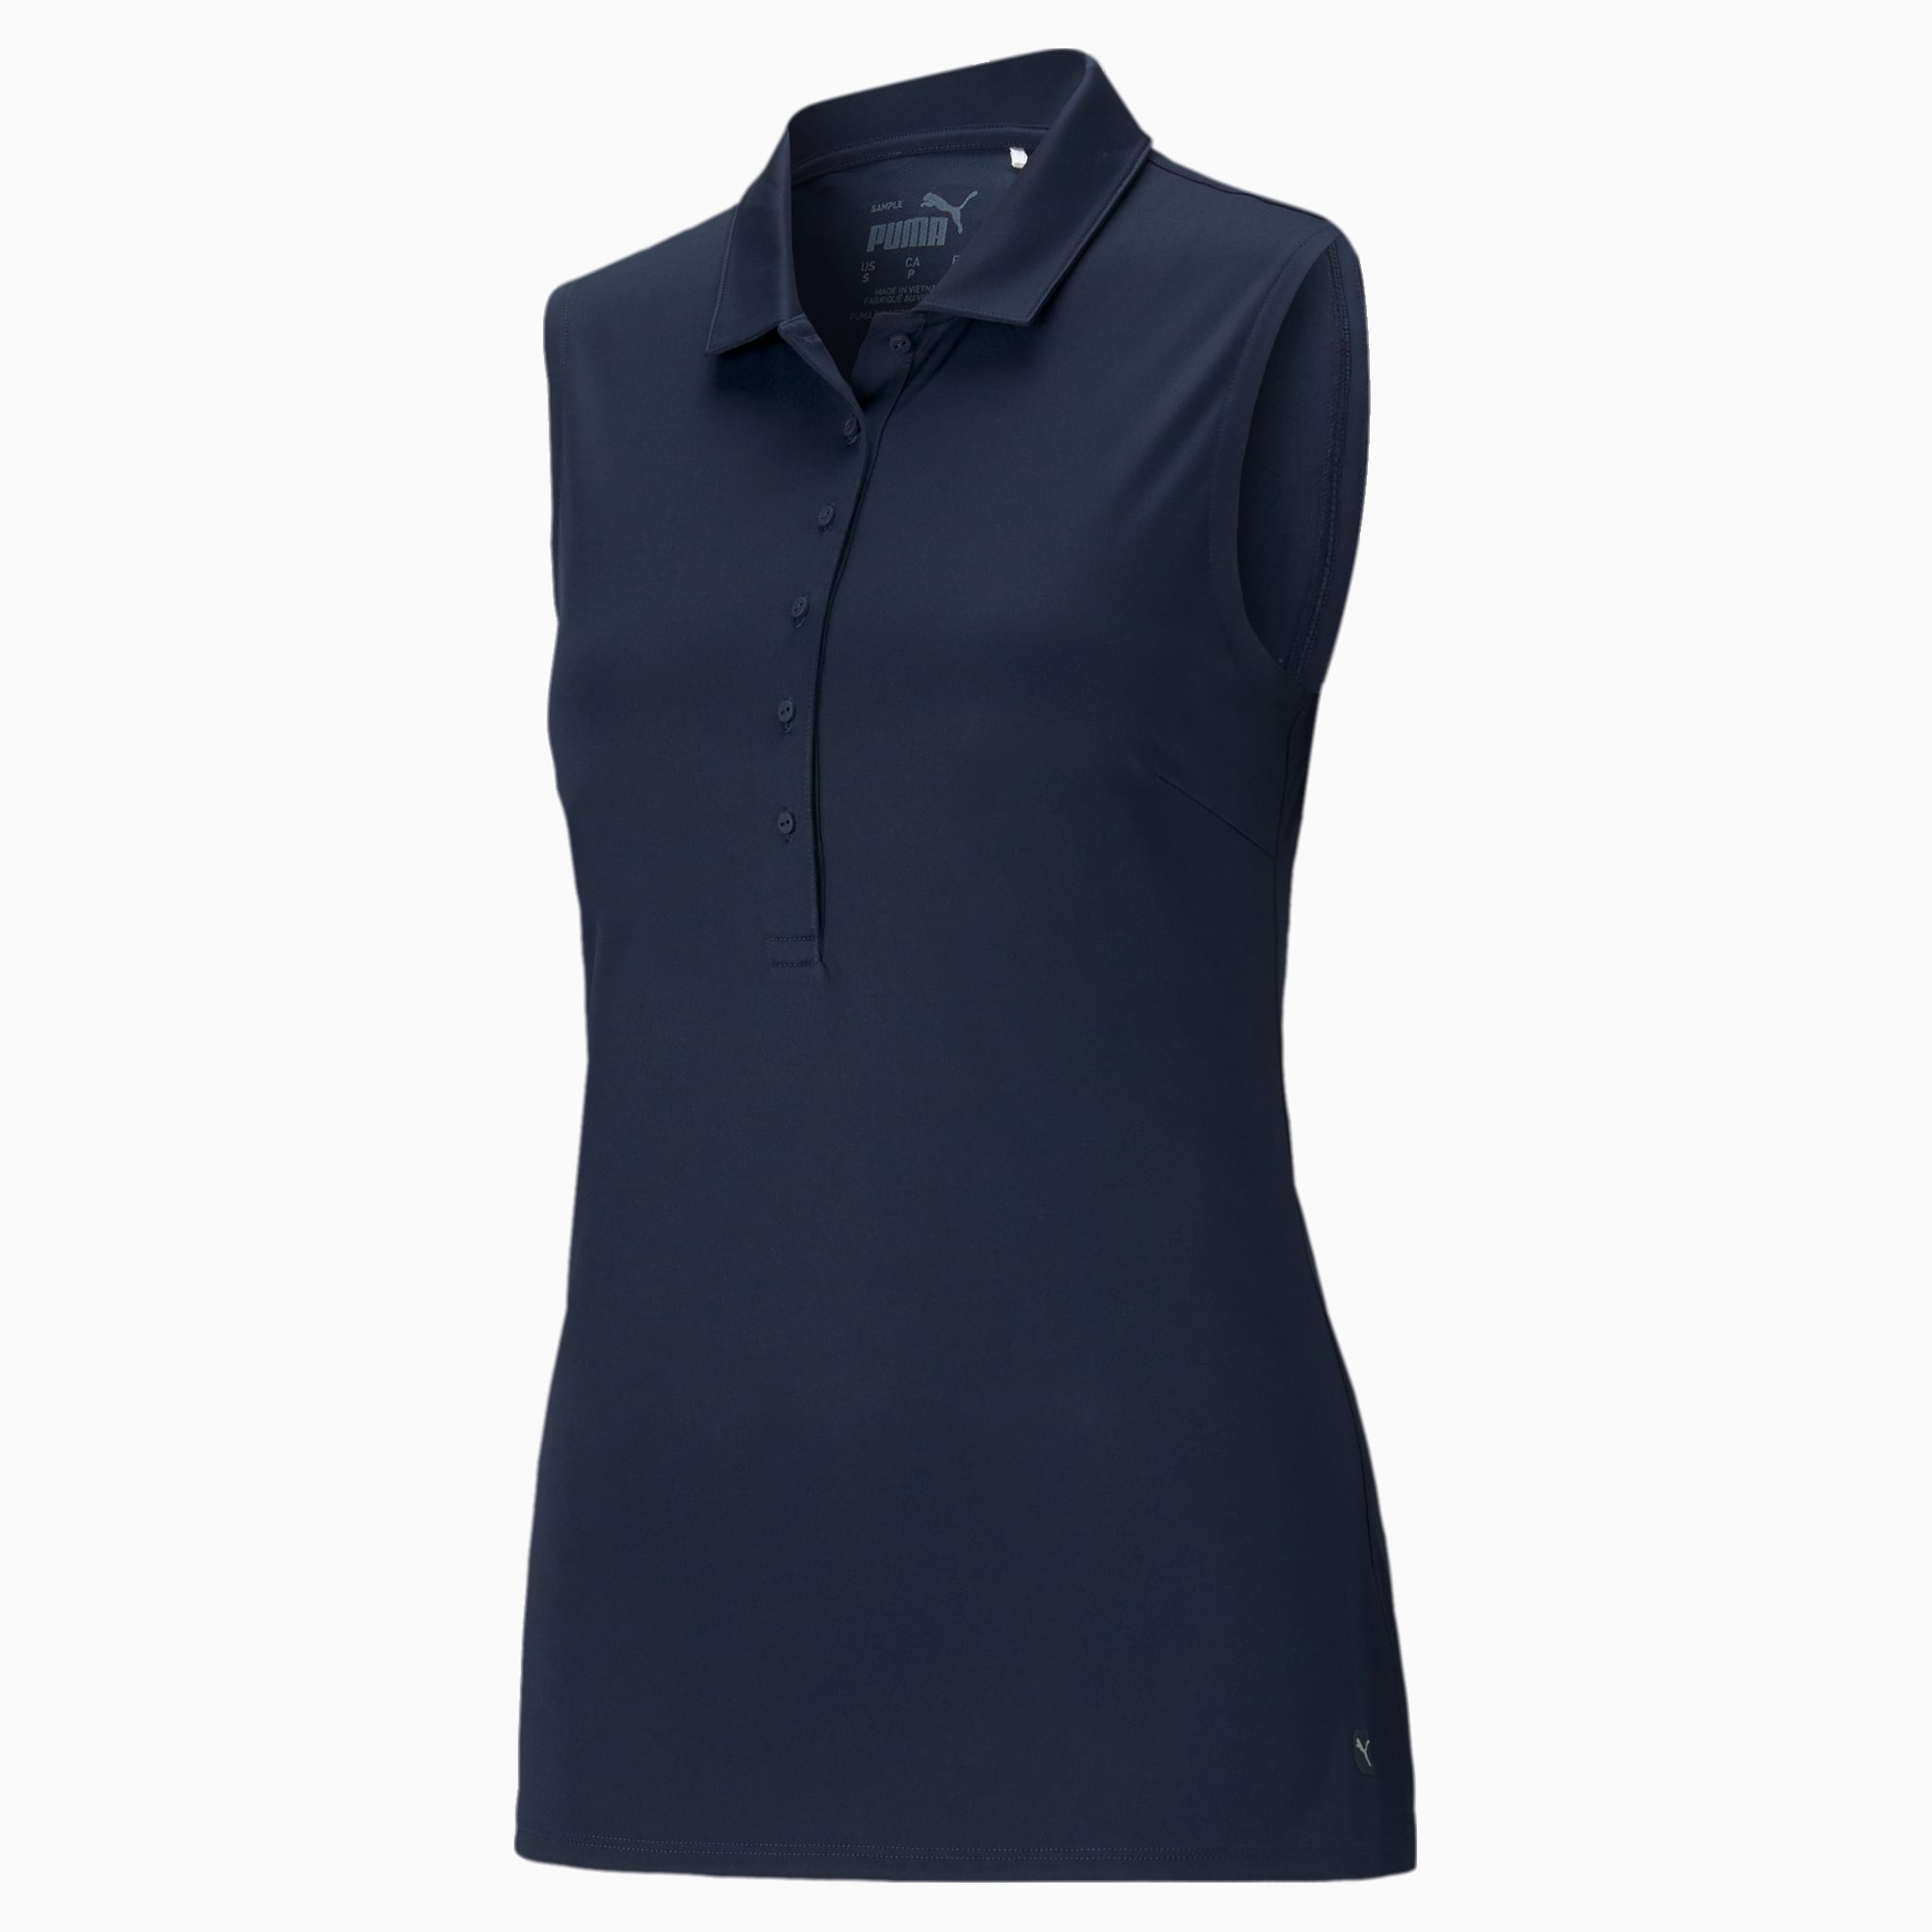 PUMA Rotations mouwloos golfpoloshirt dames pour Femme, Bleu, Taille L, Vêtements